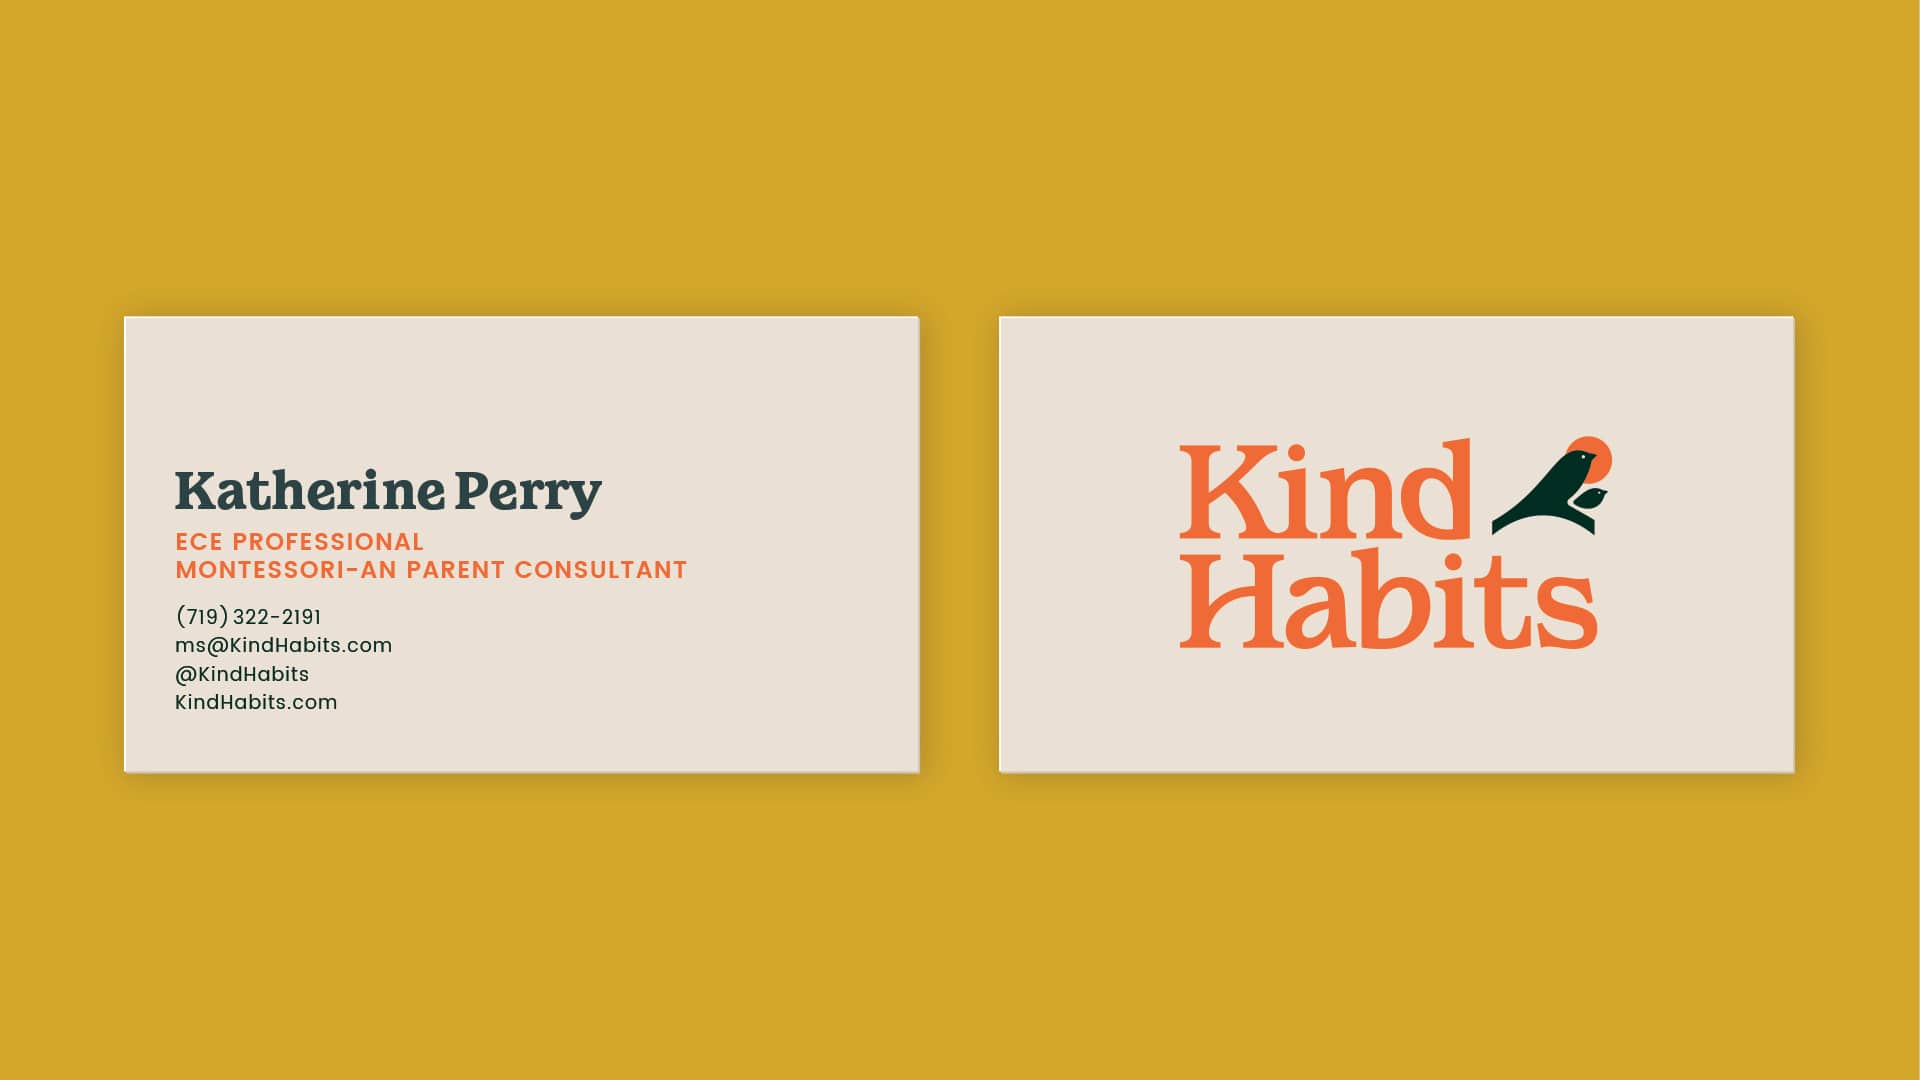 Image of Kind Habits' business card.